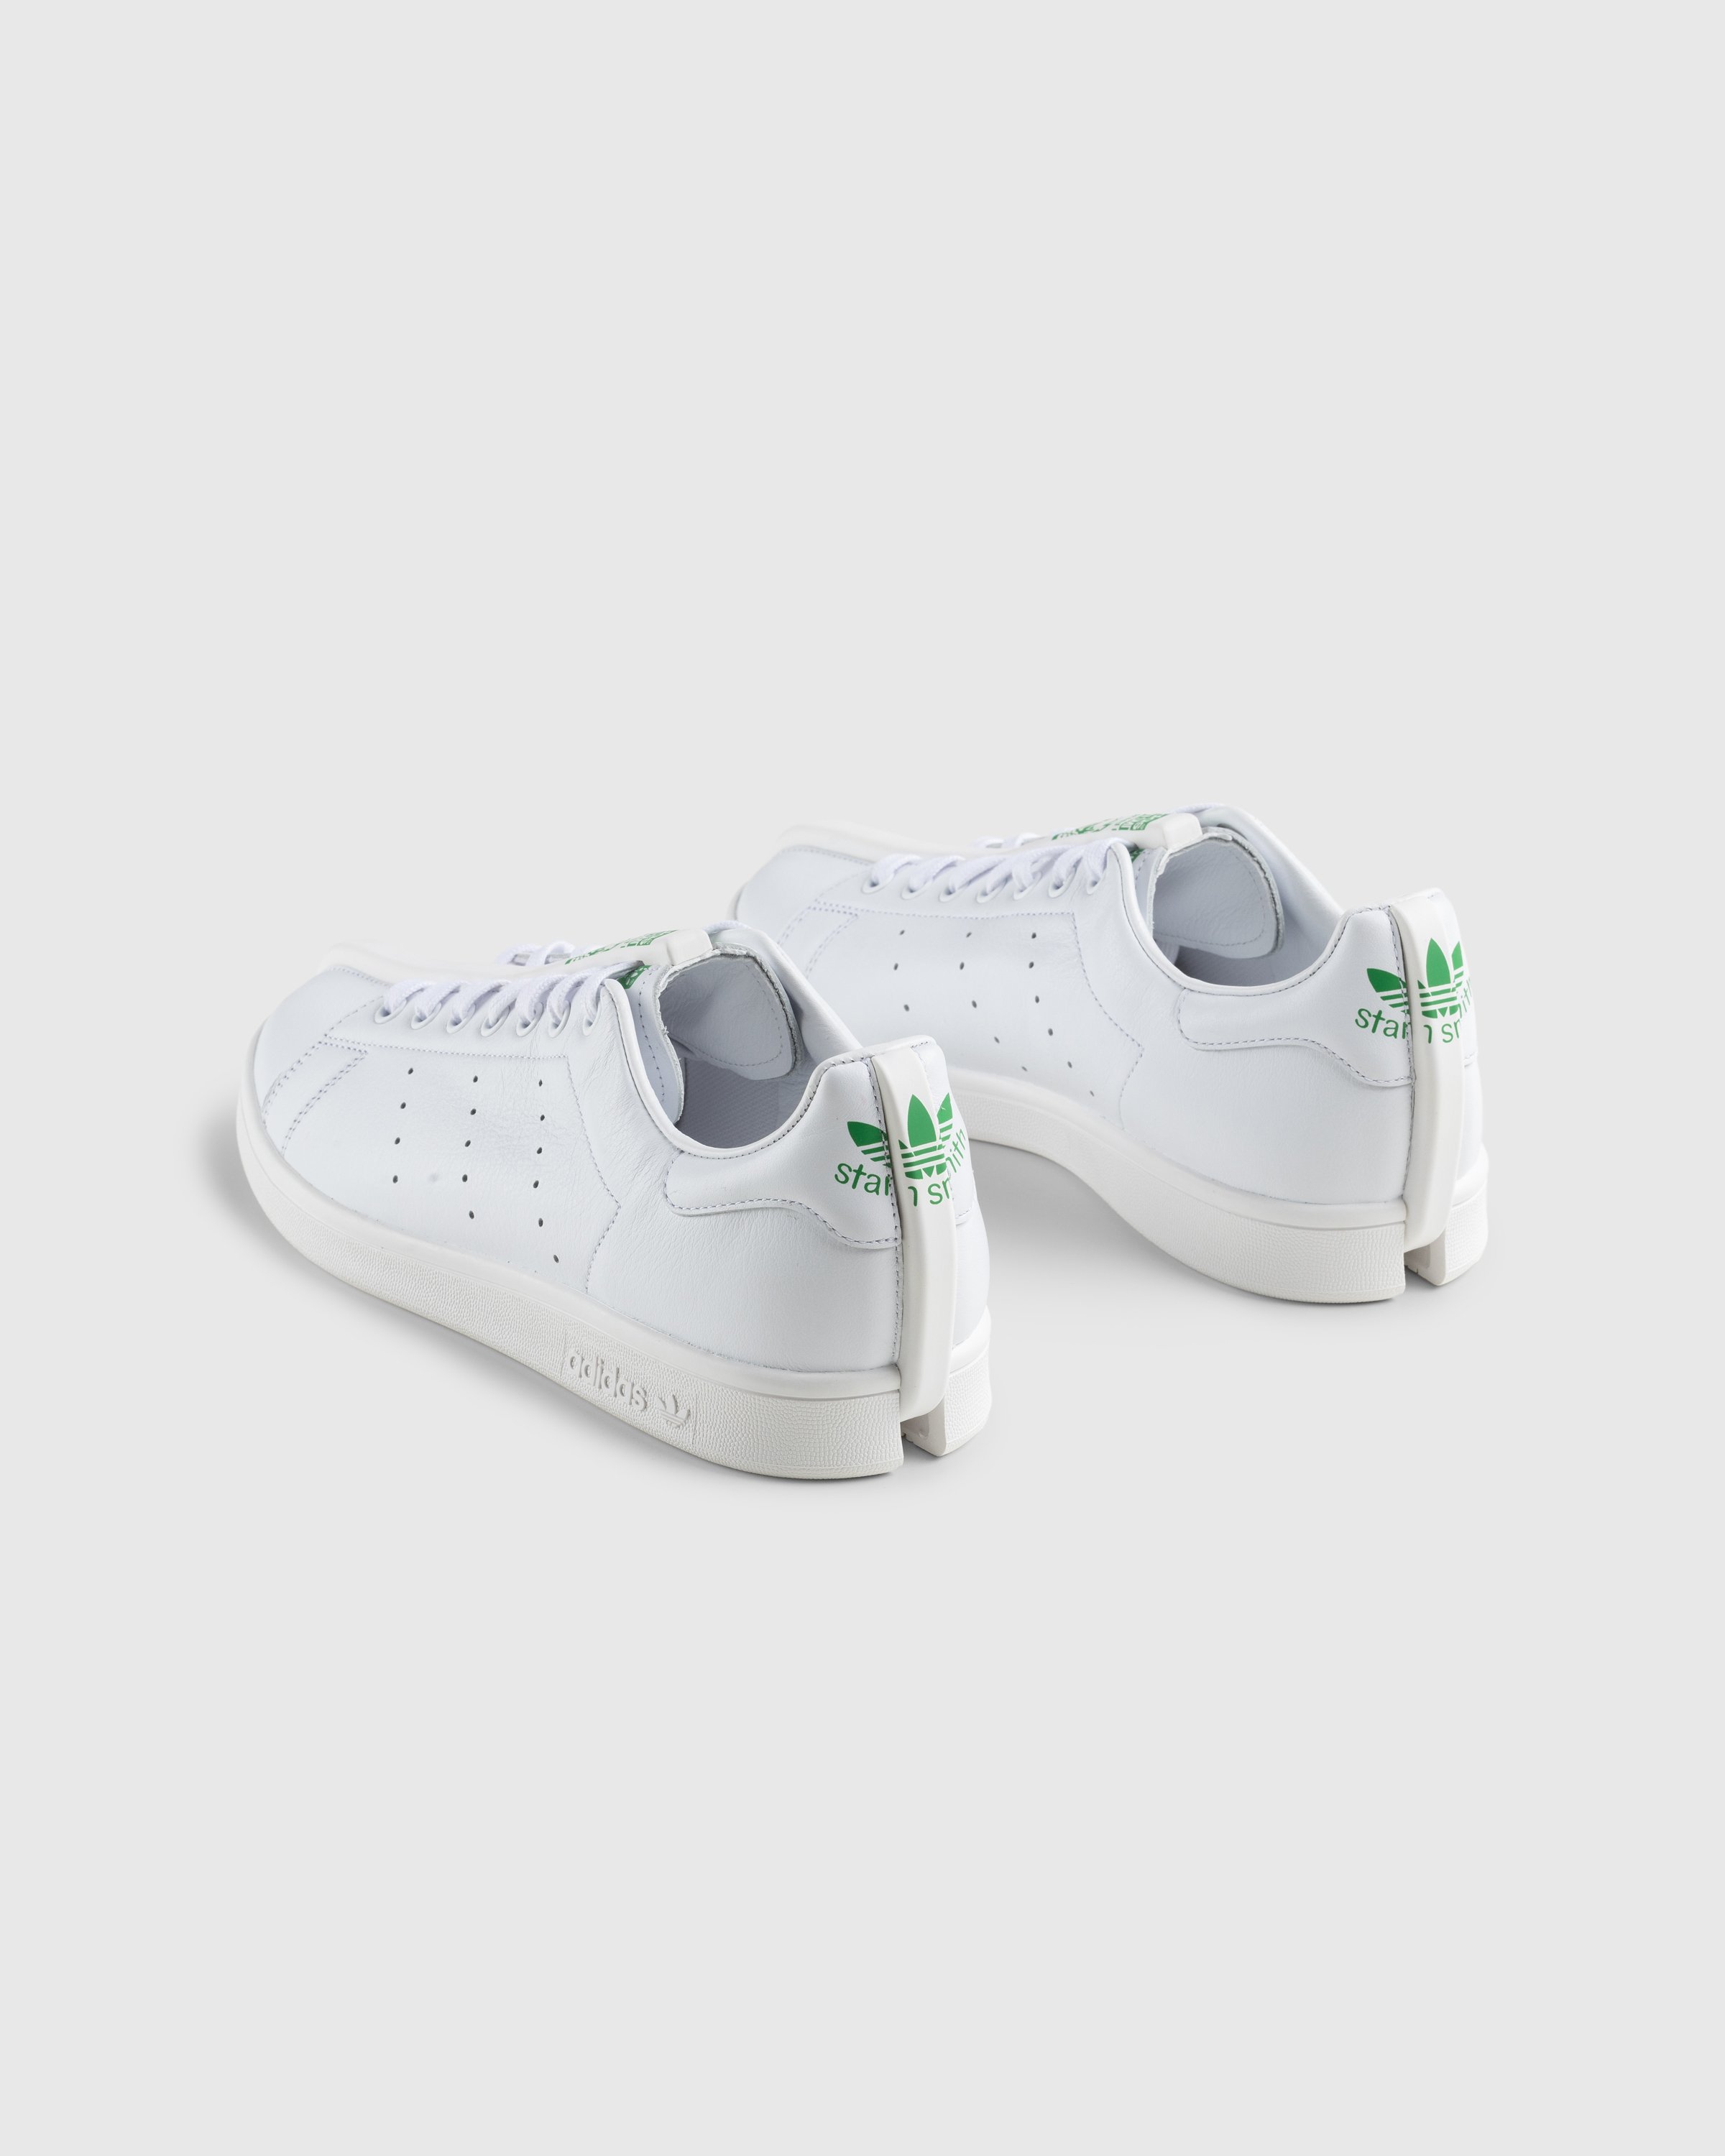 Craig Green x Adidas - CG Split Stan Smith CWHITE/CWHITE/CBLACK - Footwear - White - Image 4